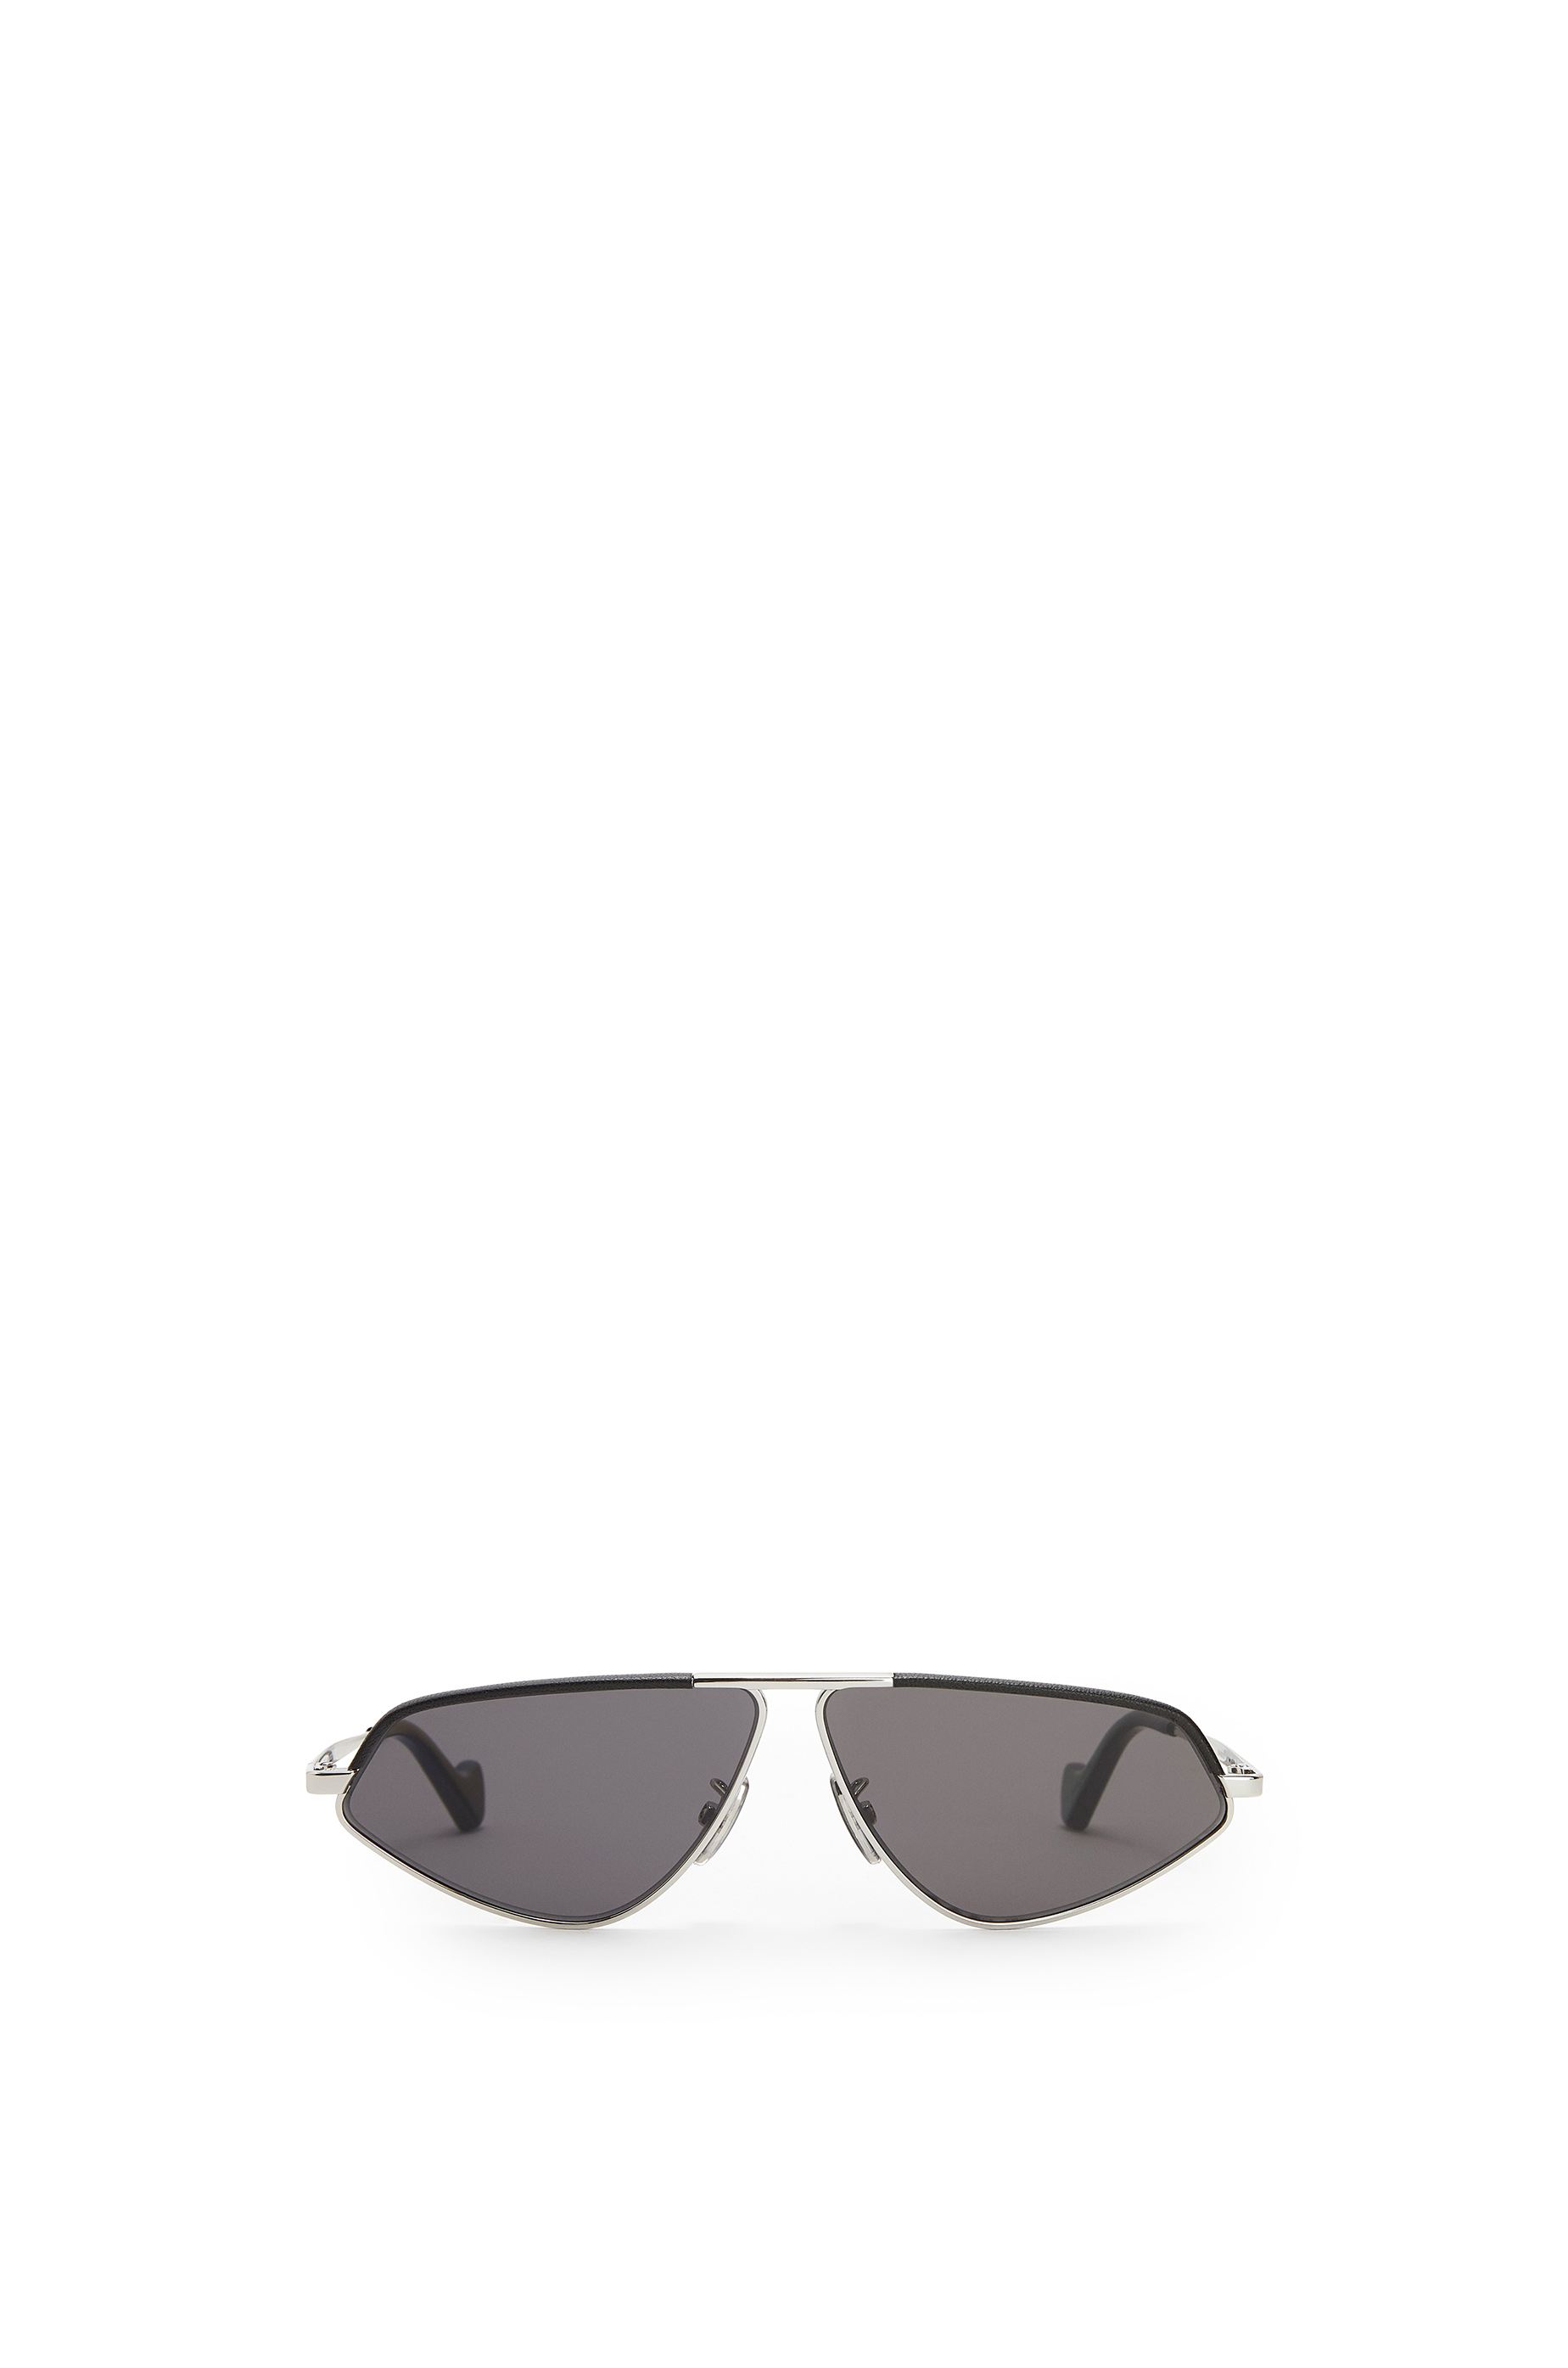 Leather geometric sunglasses Anthracite 